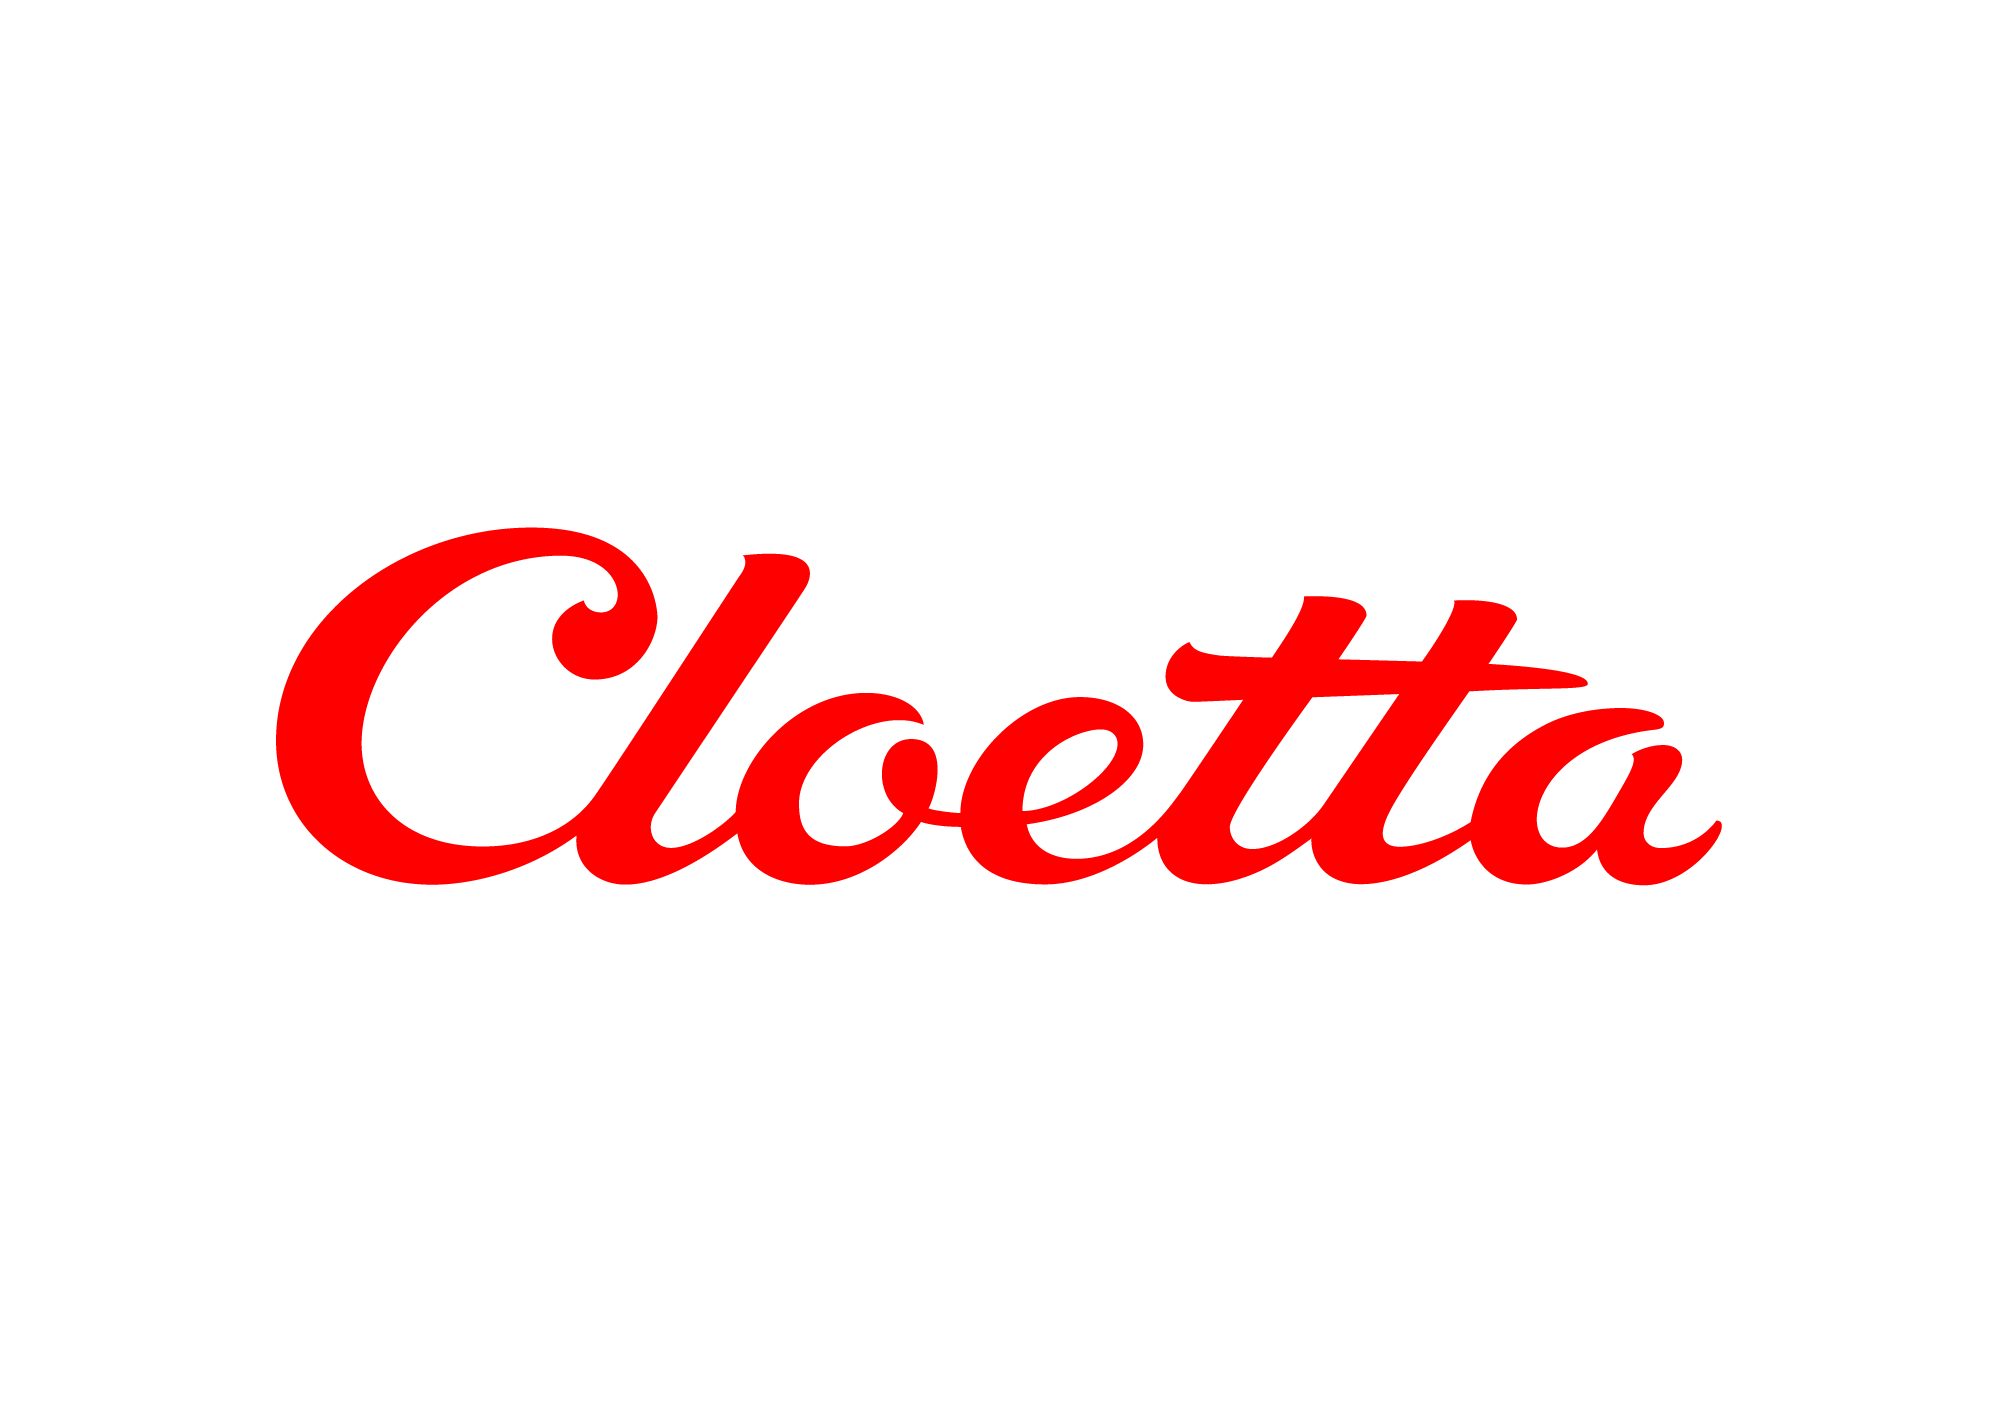 Cloetta_logo_CMYK.png